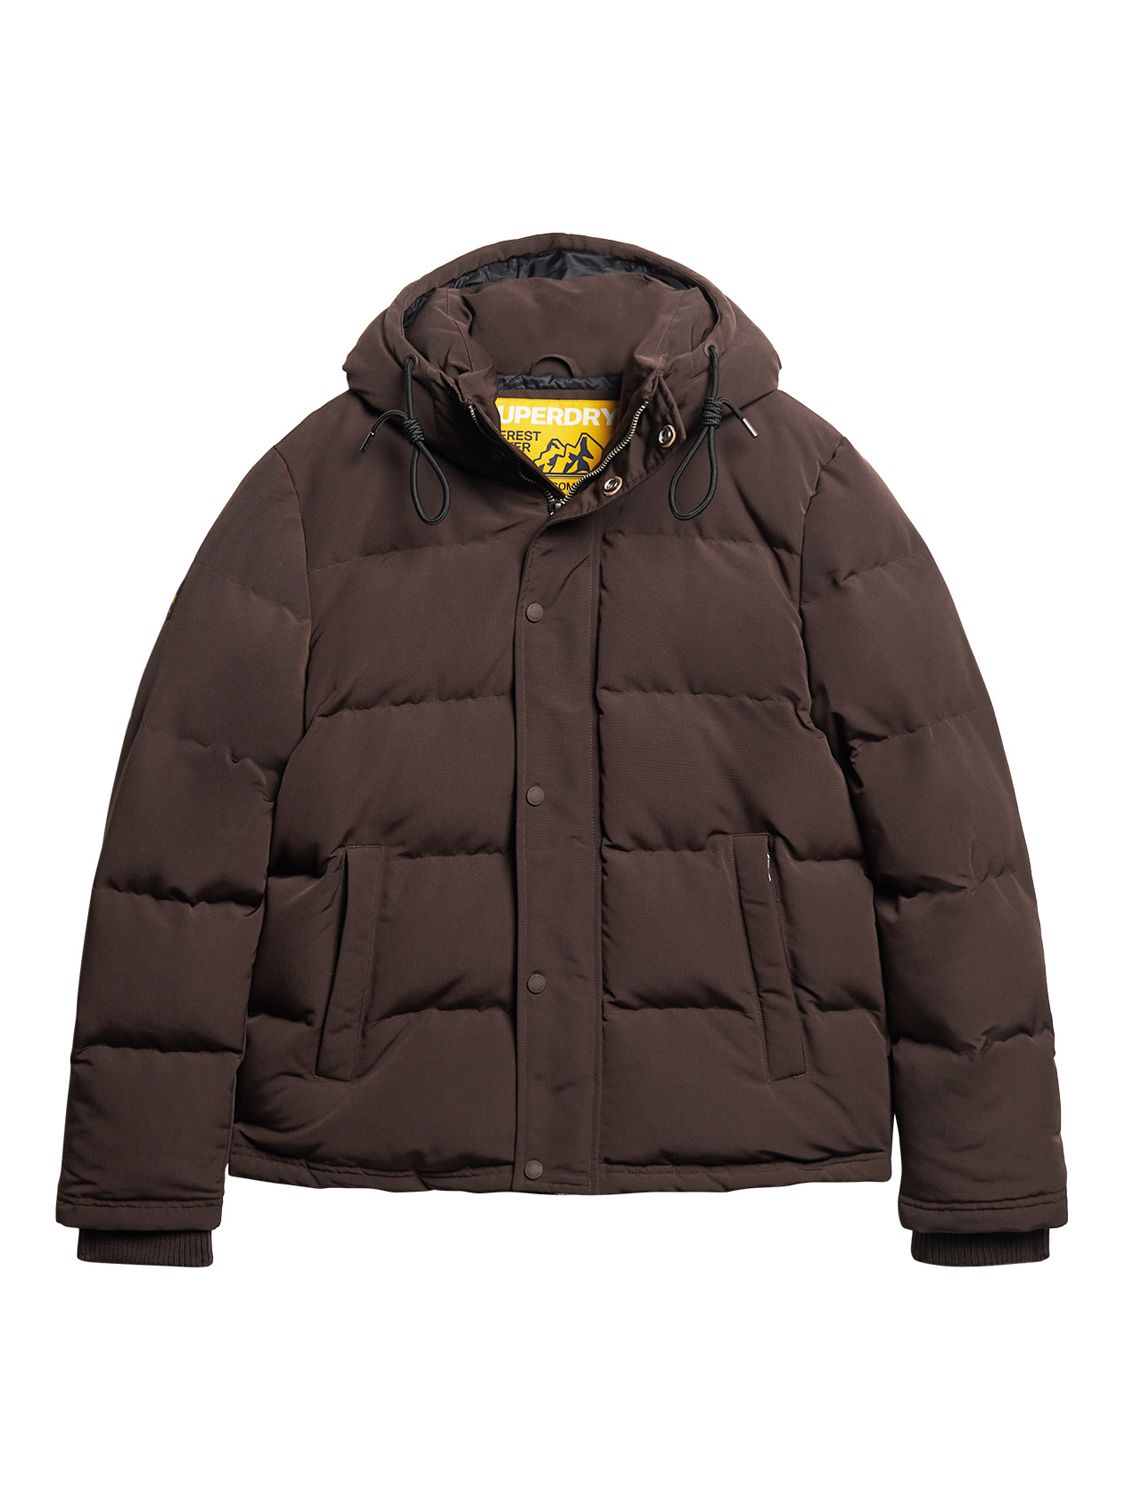 Superdry Everest Hooded Puffer Jacket, Dark Brown at John Lewis & Partners